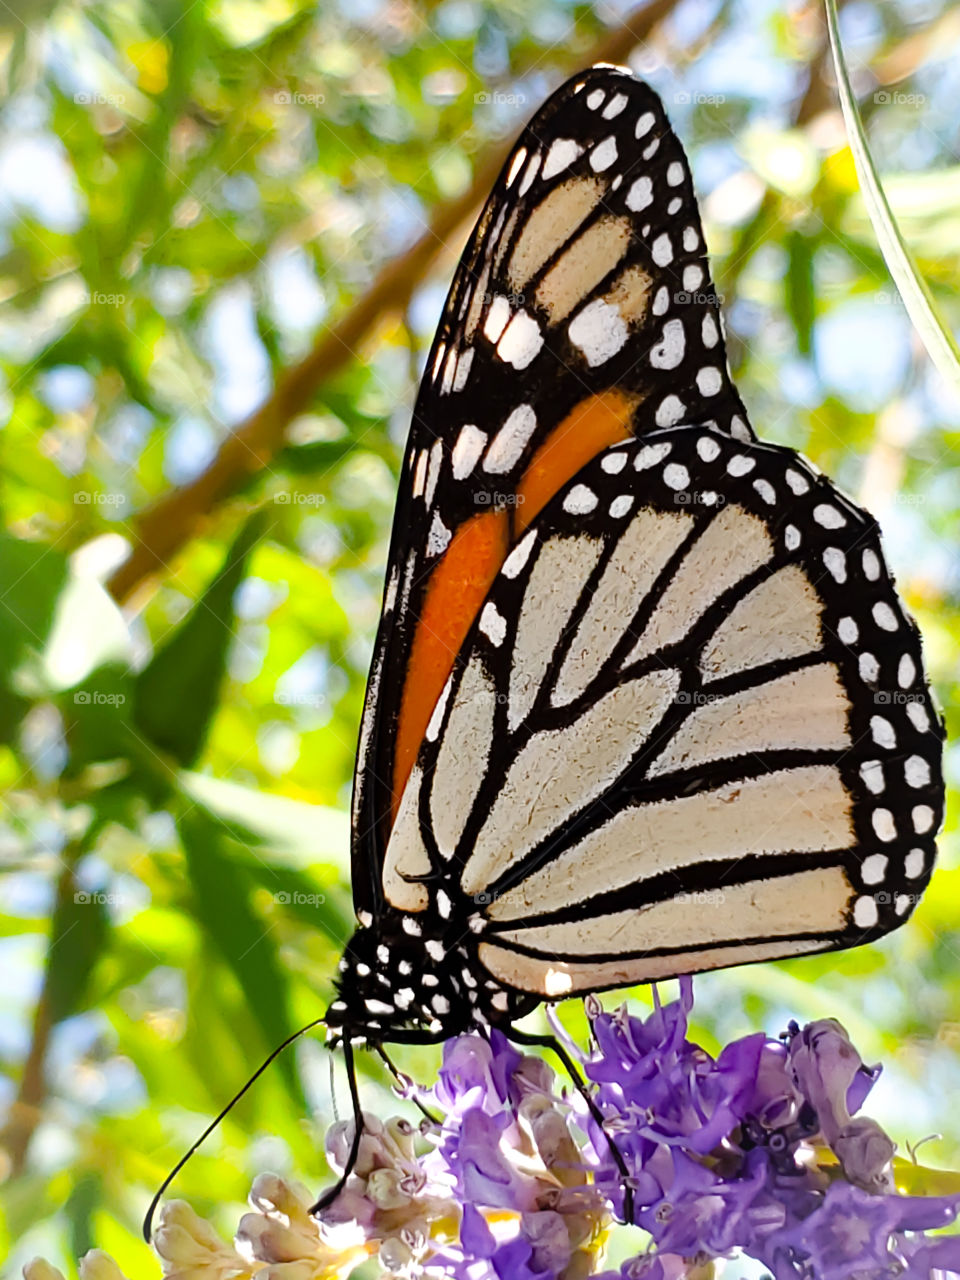 The beautiful monarch butterfly (Danaus plexippus) feeding on purple Chaste tree (Vitex agnus-castus) flowers.